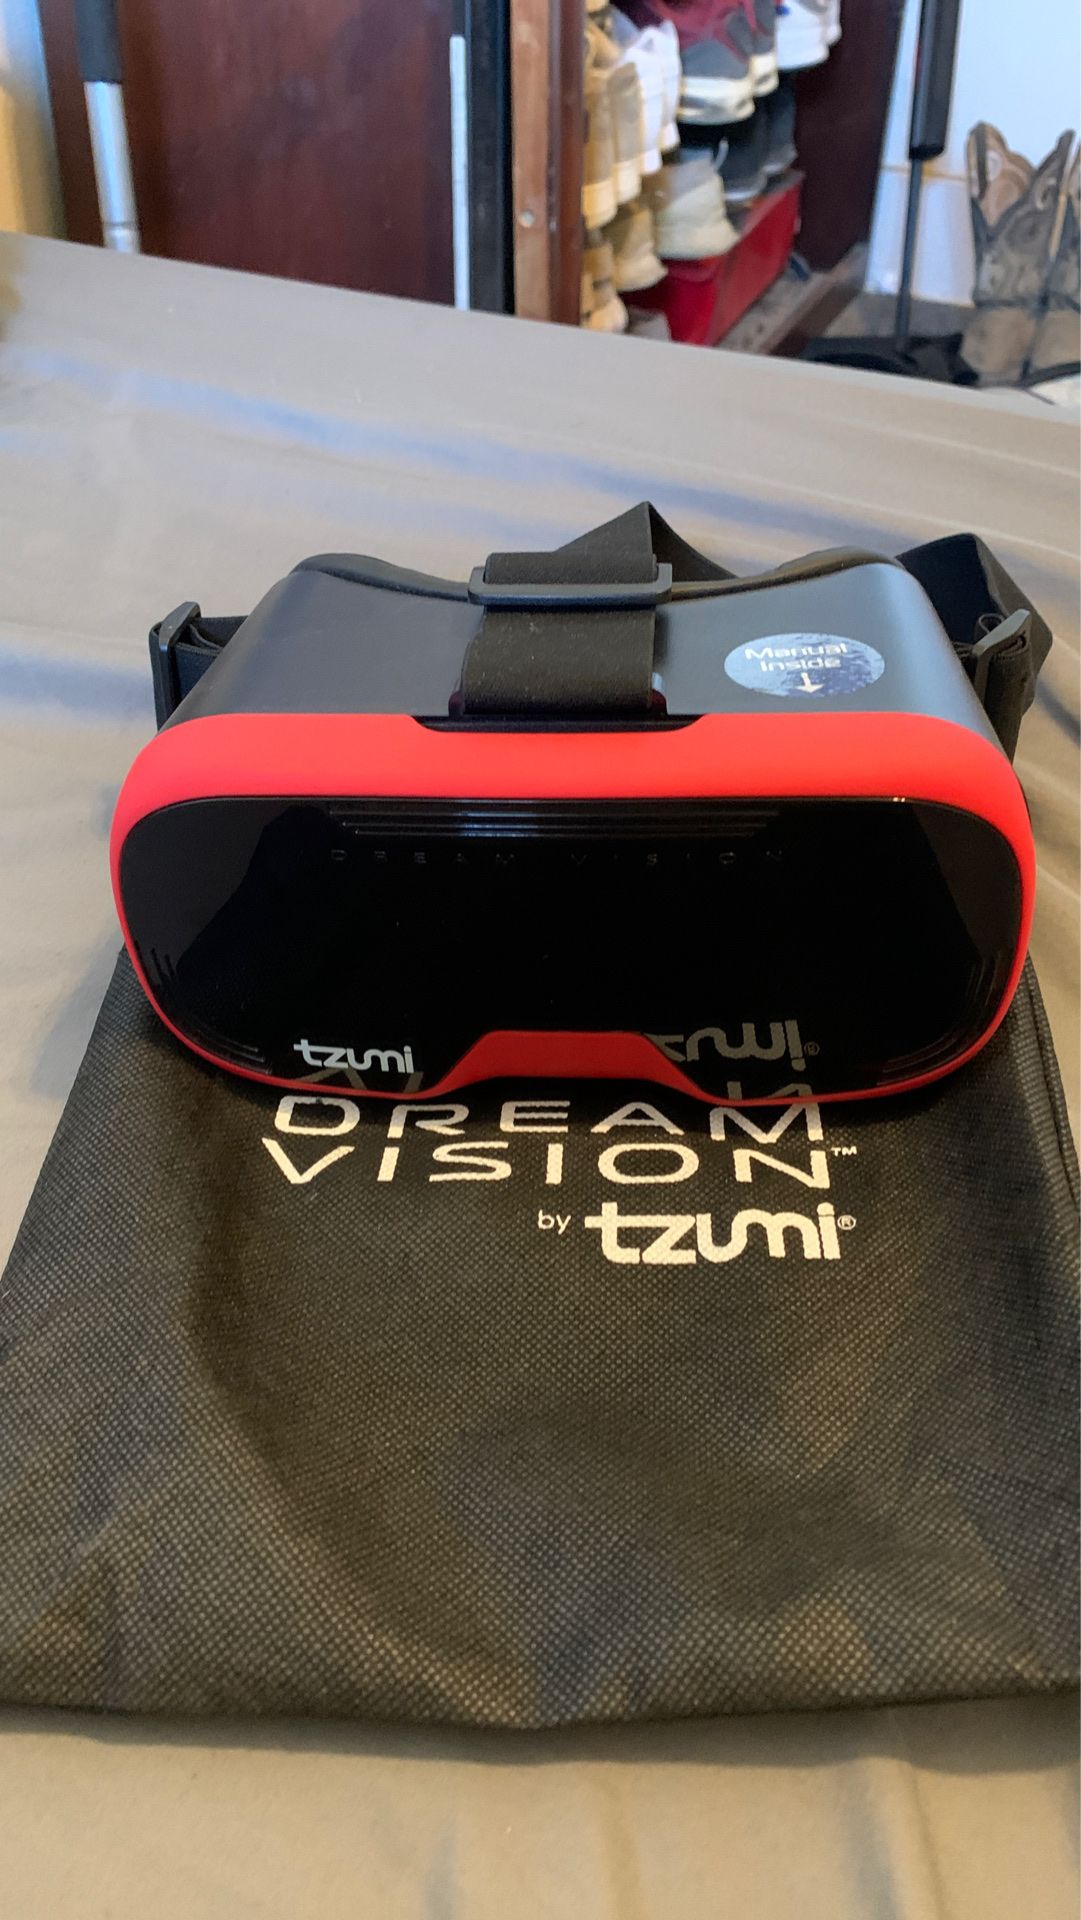 Dream Vision VR Headset